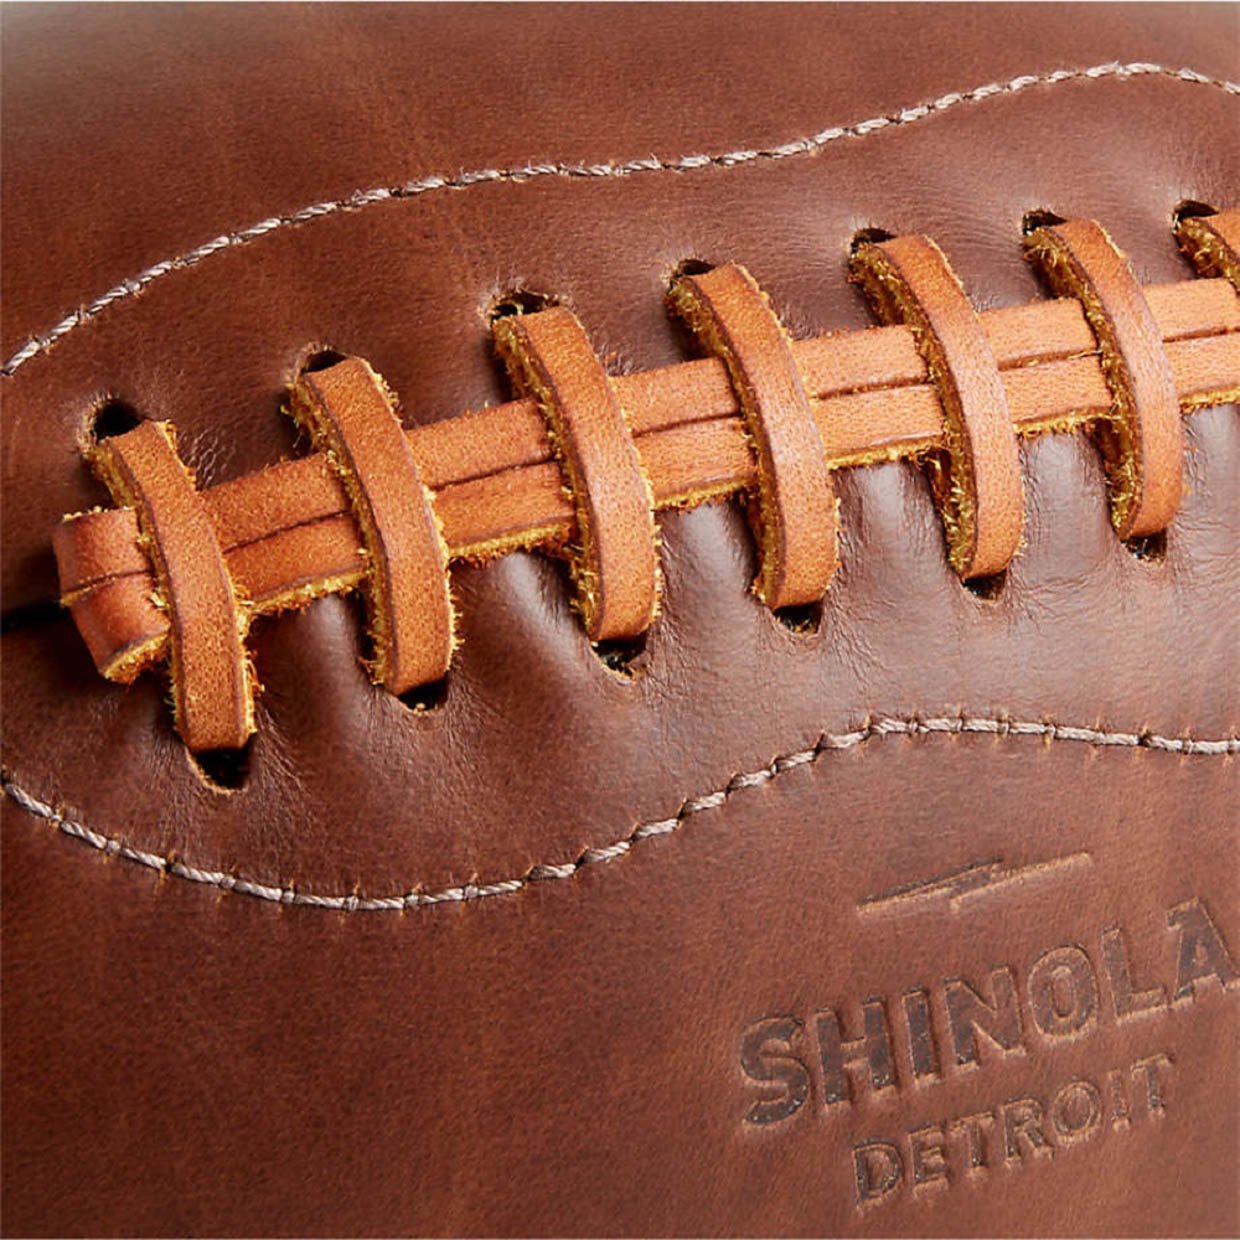 Crate and Barrel x Shinola Leather Football